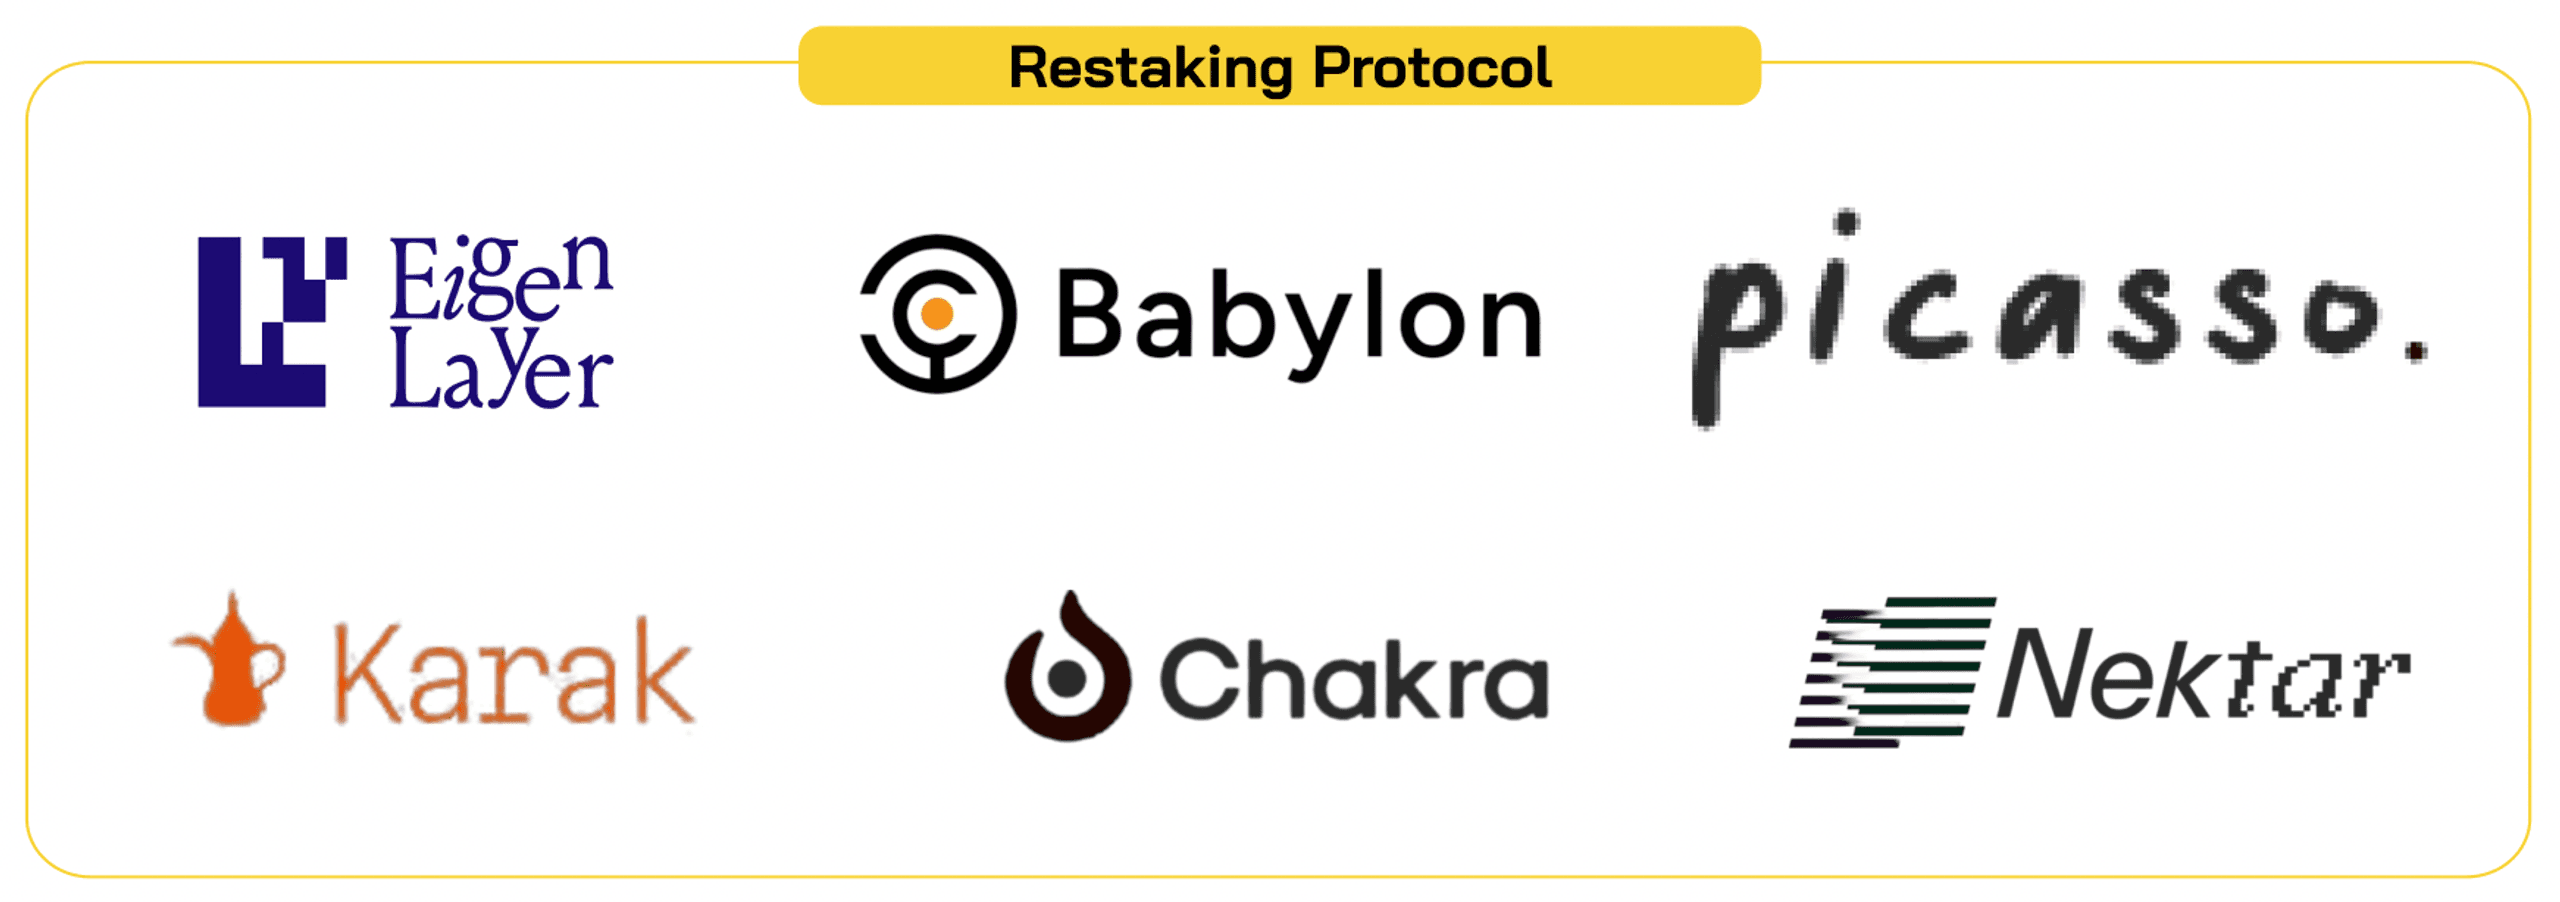 restaking protocol